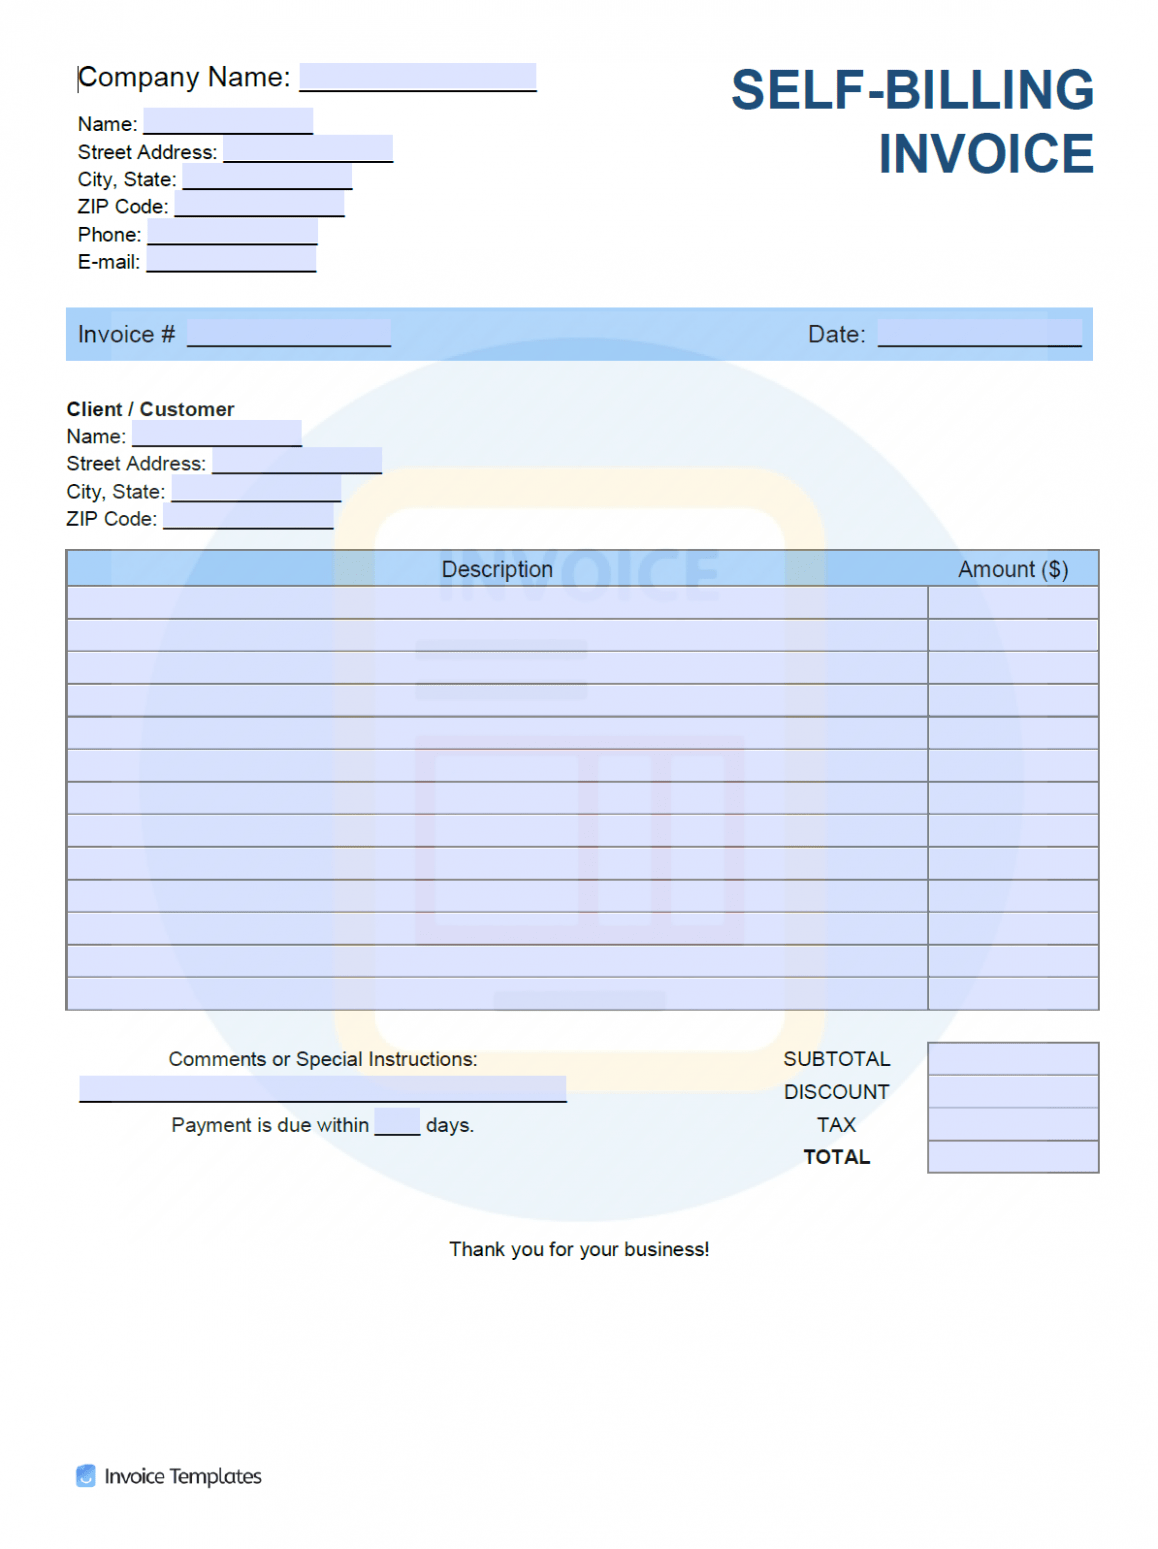 Sample Self Billing Invoice Template PPT